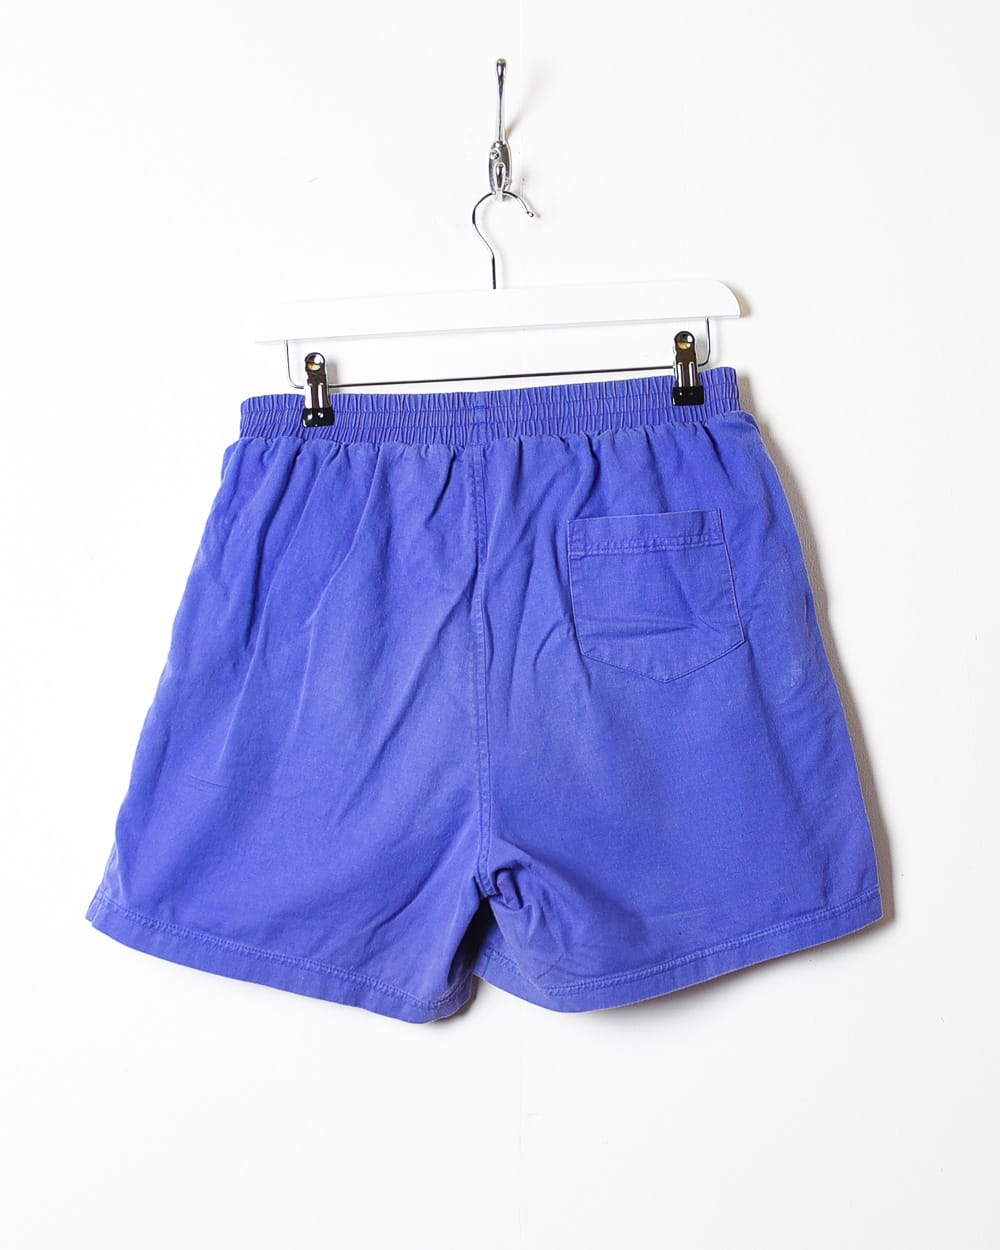 Purple Adidas Shorts - Medium